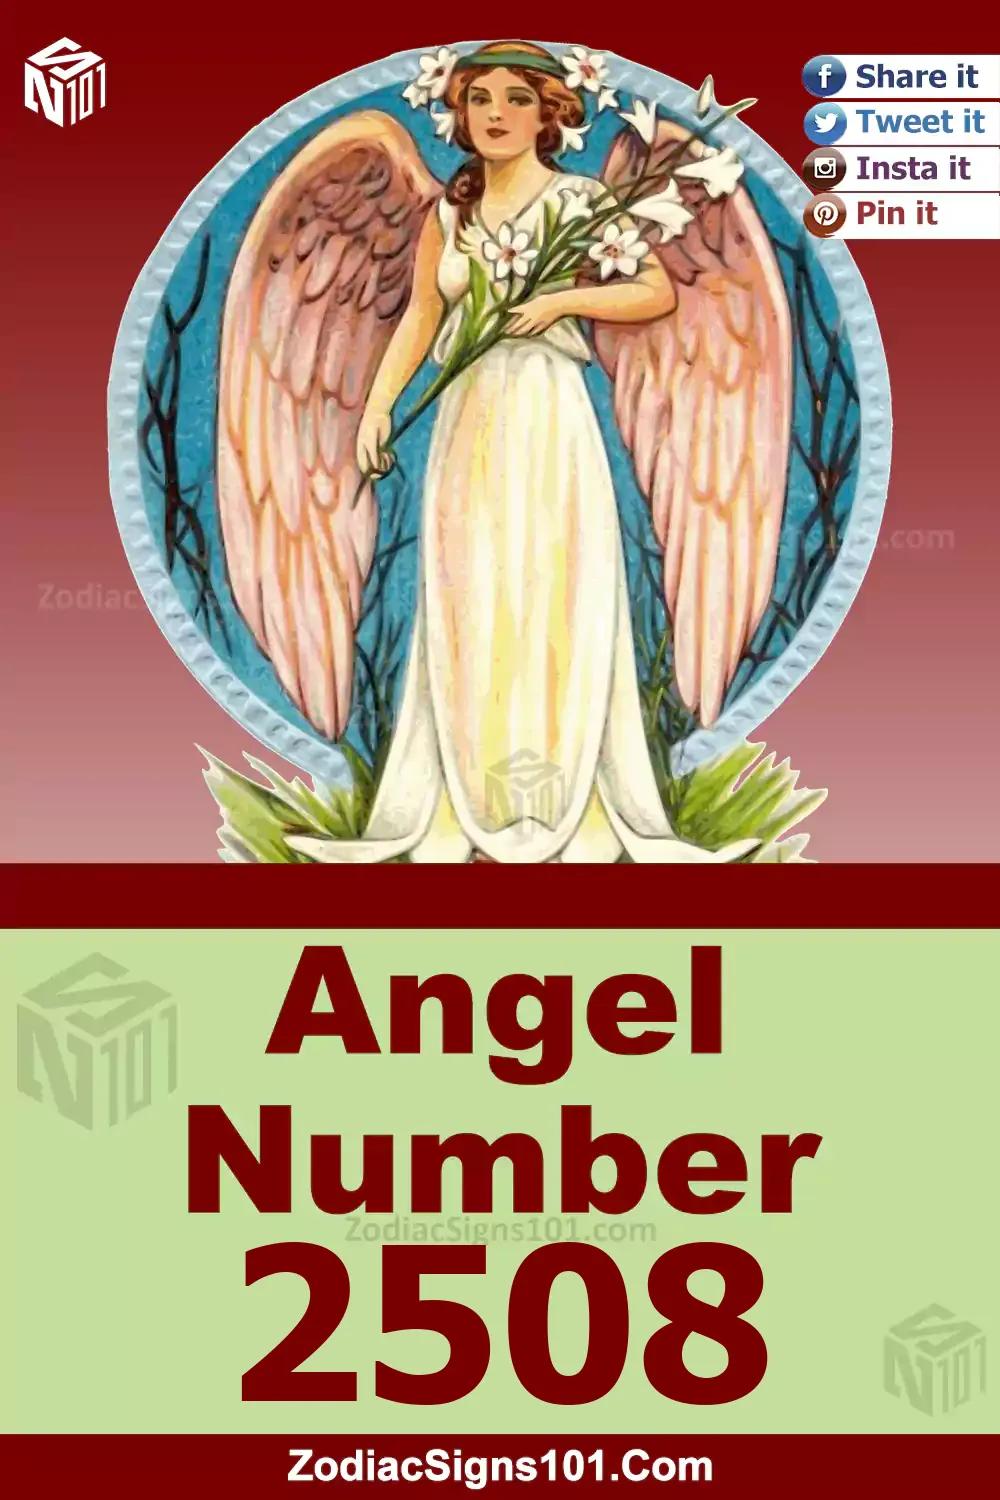 2508-Angel-Number-Meaning.jpg